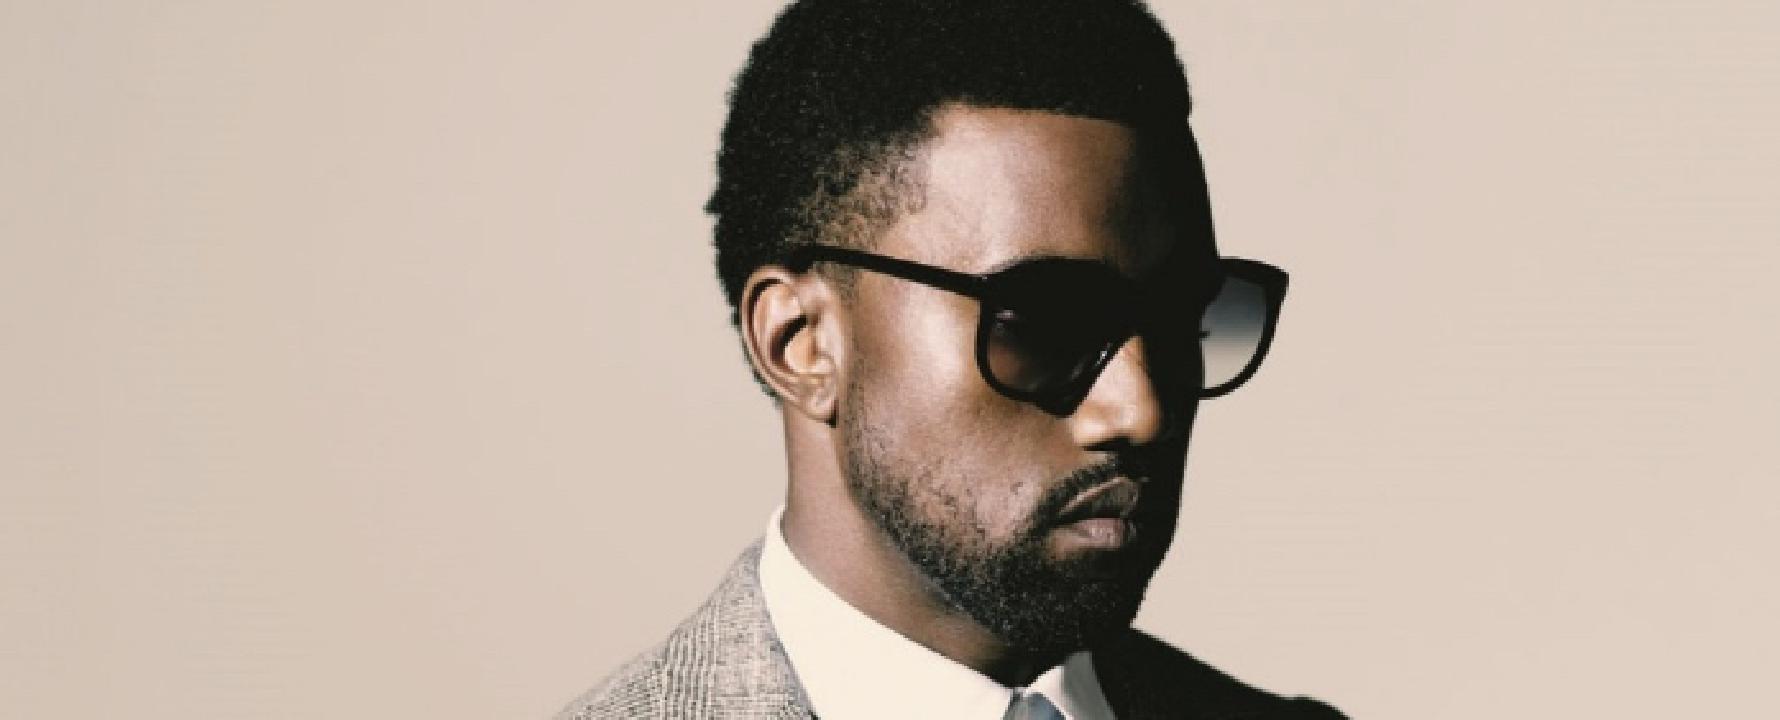 Promotional photograph of Kanye West.